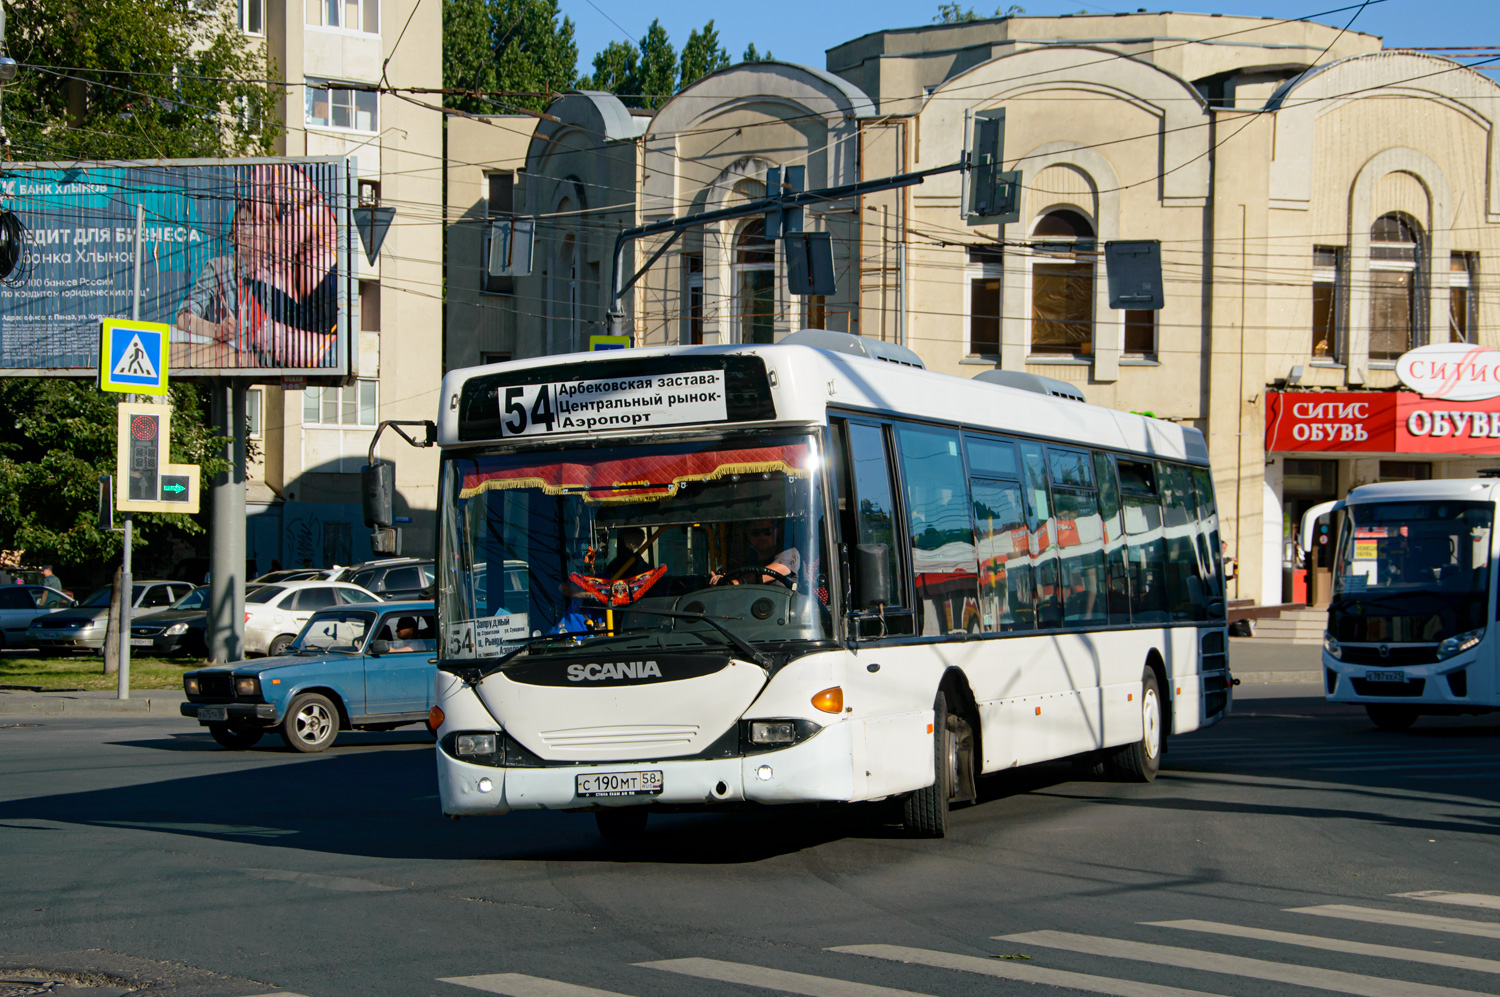 Penzai terület, Scania OmniLink I (Scania-St.Petersburg) sz.: С 190 МТ 58; Penzai terület, PAZ-320435-04 "Vector Next" sz.: Е 787 ХХ 21